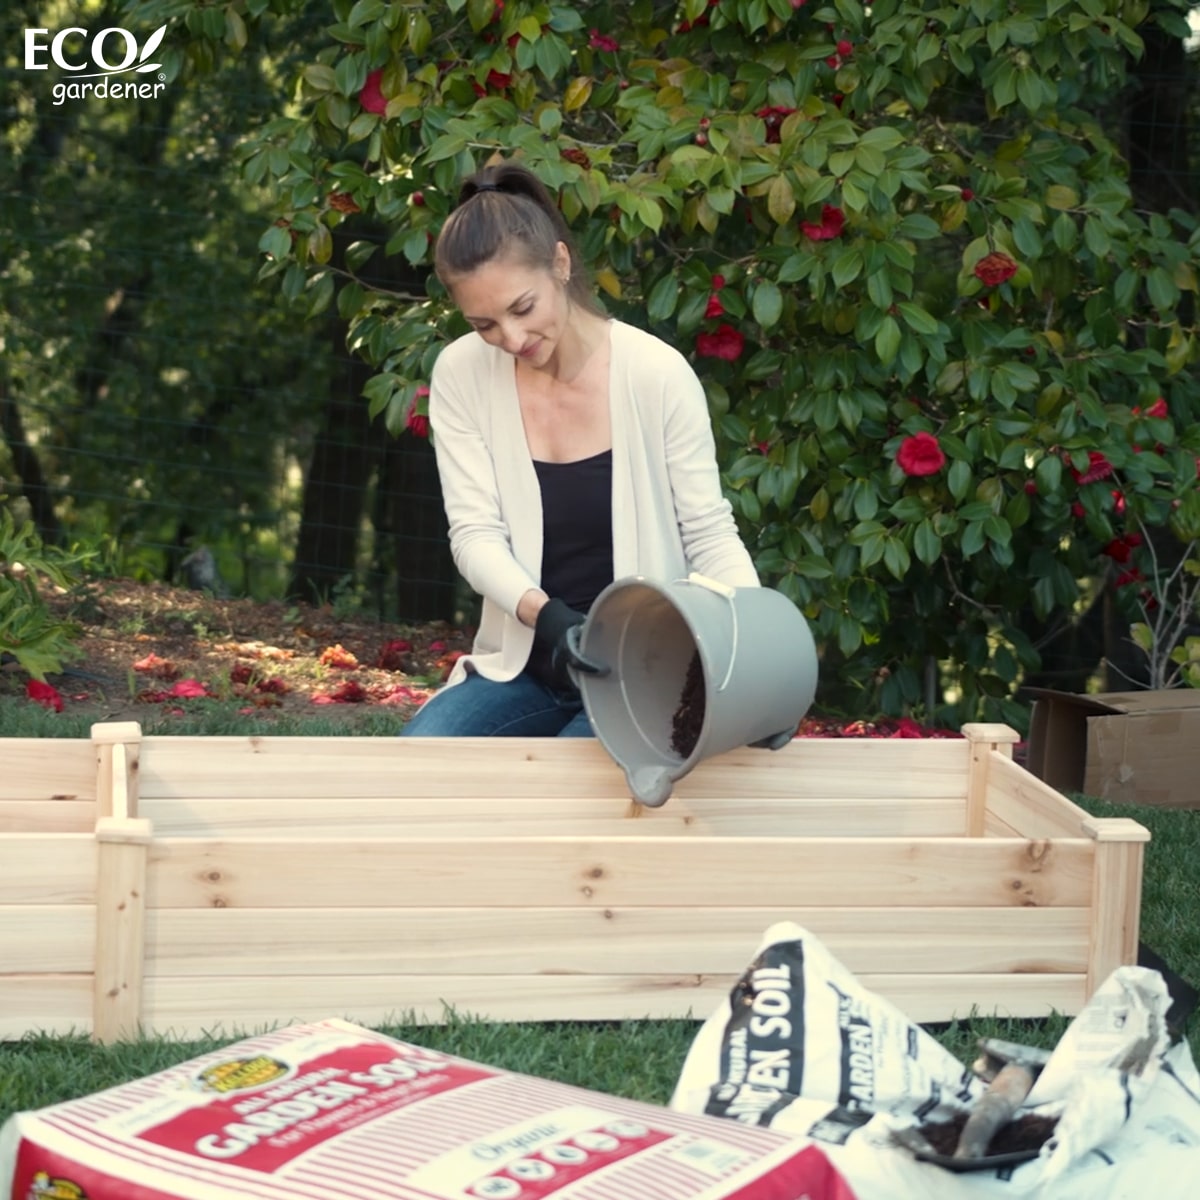 Woman adding soil to the Ecogardener Raised Bed